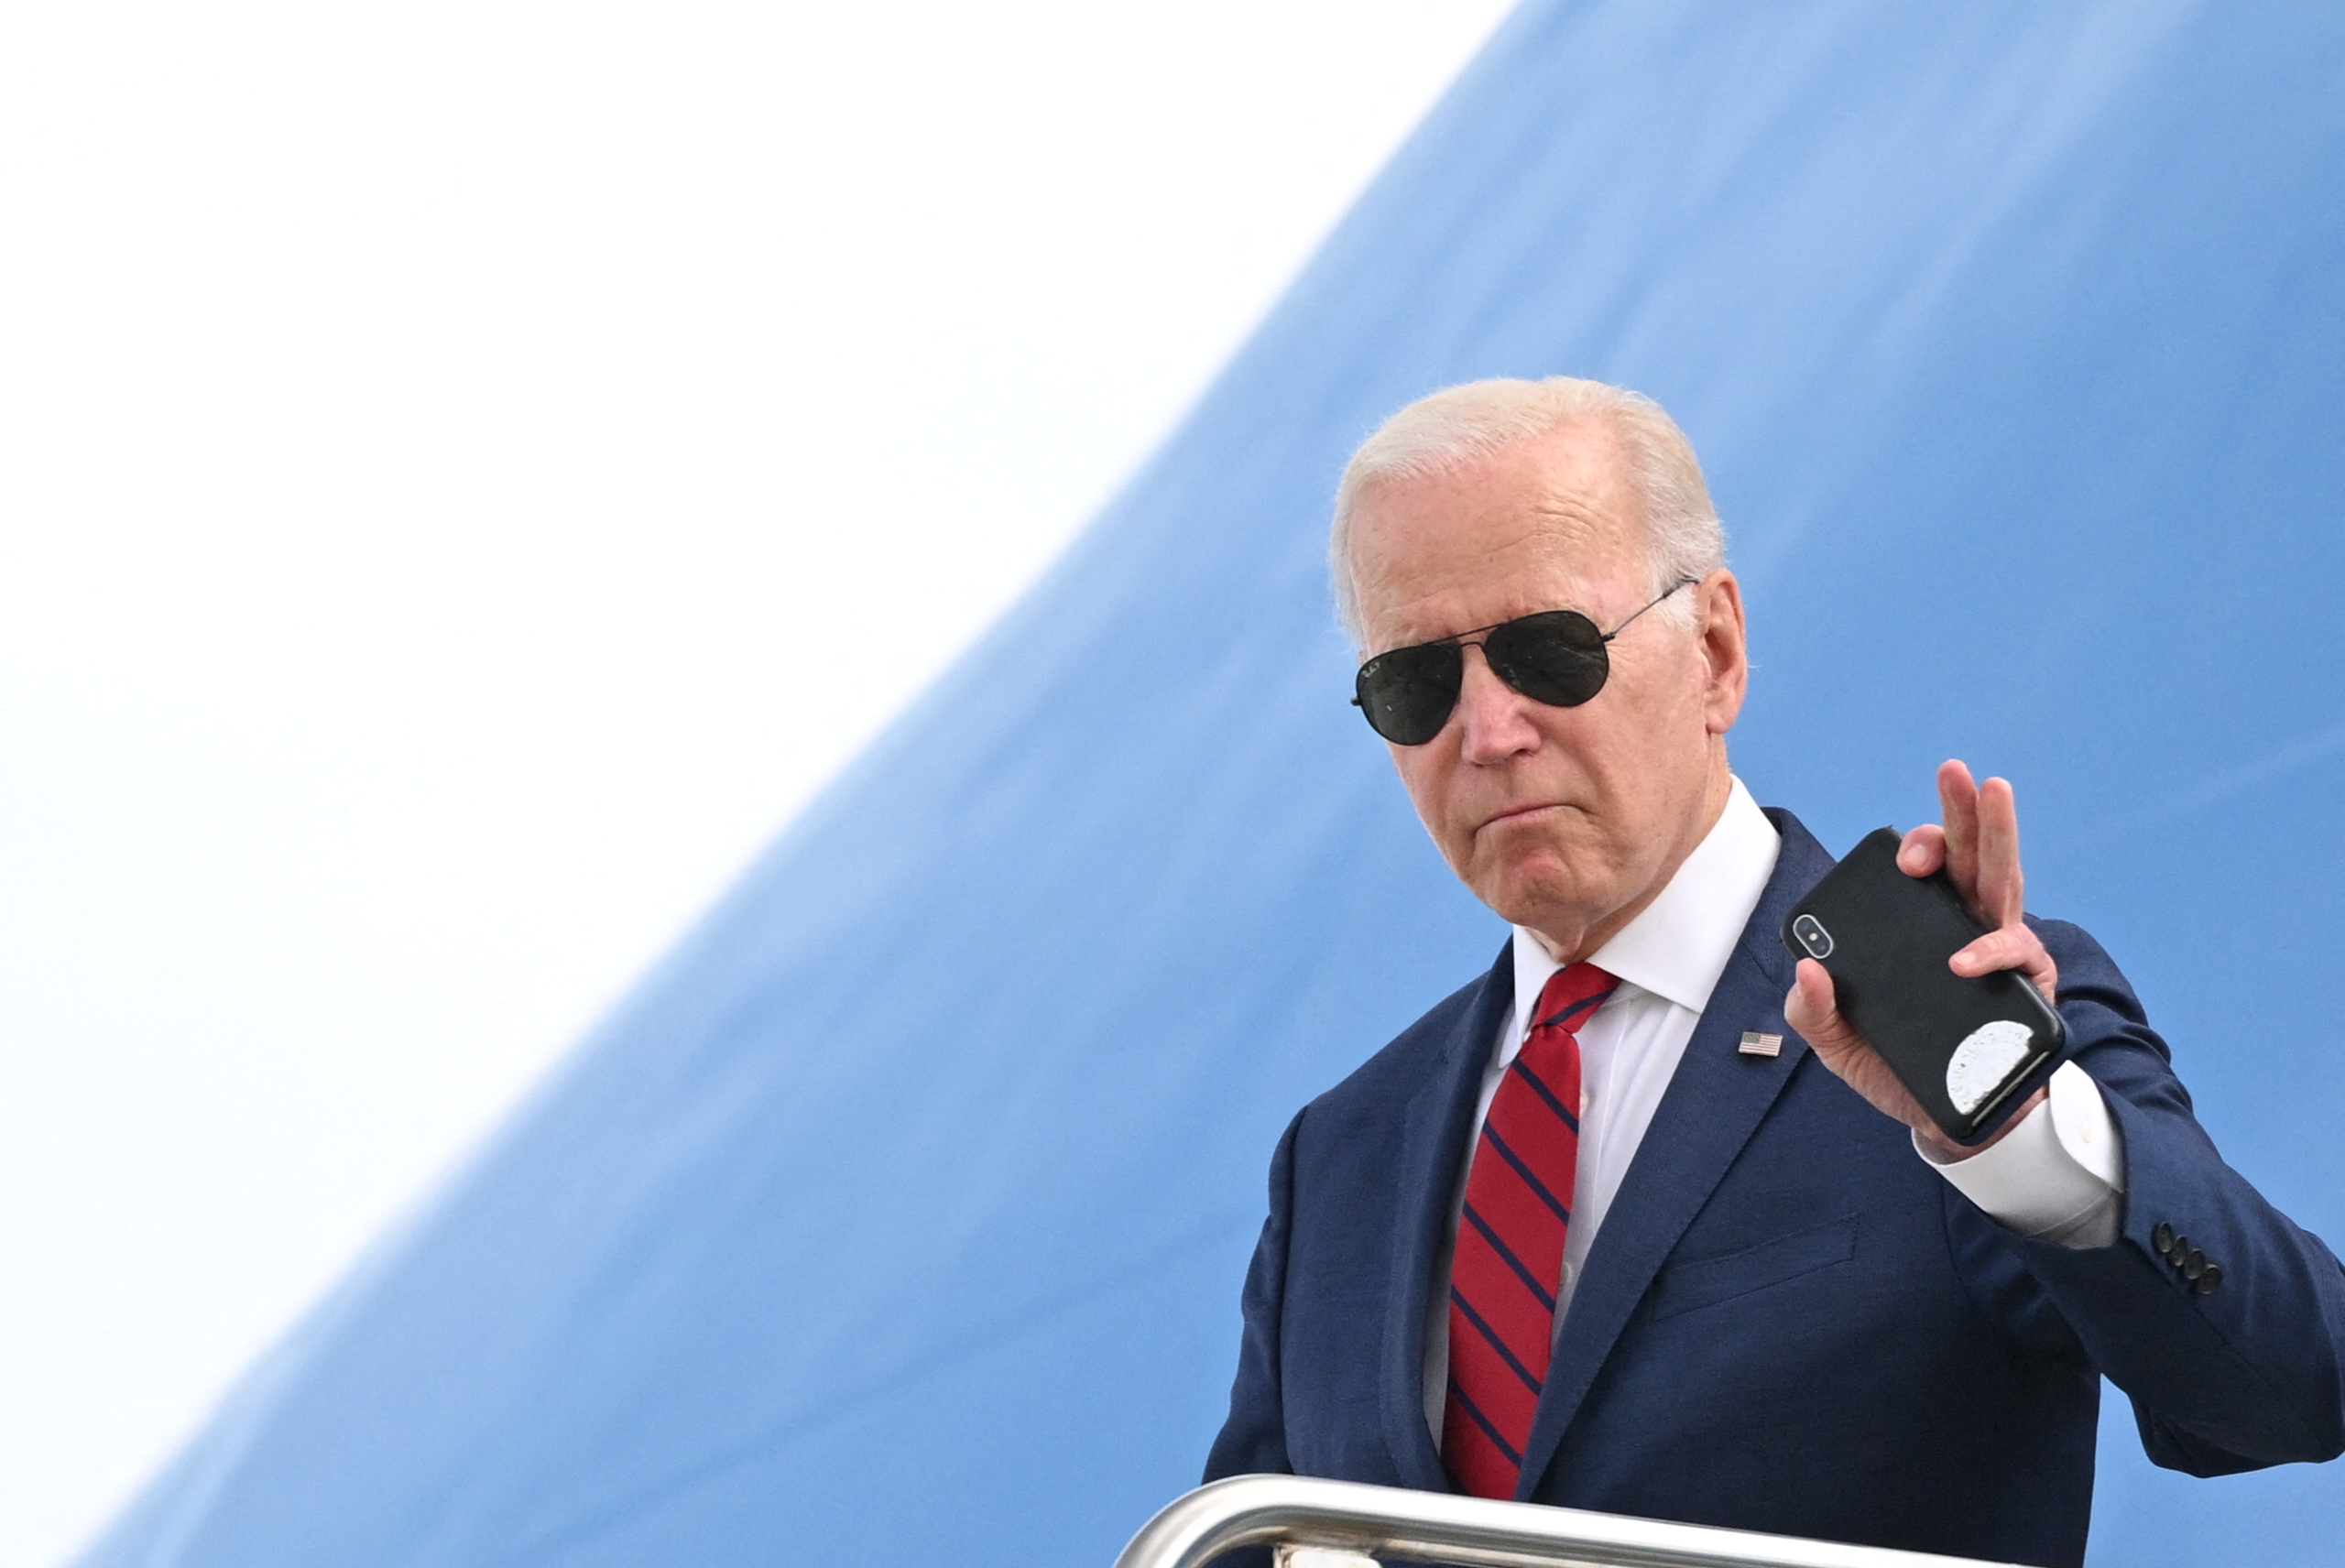  Joe Biden disembarks Air Force One